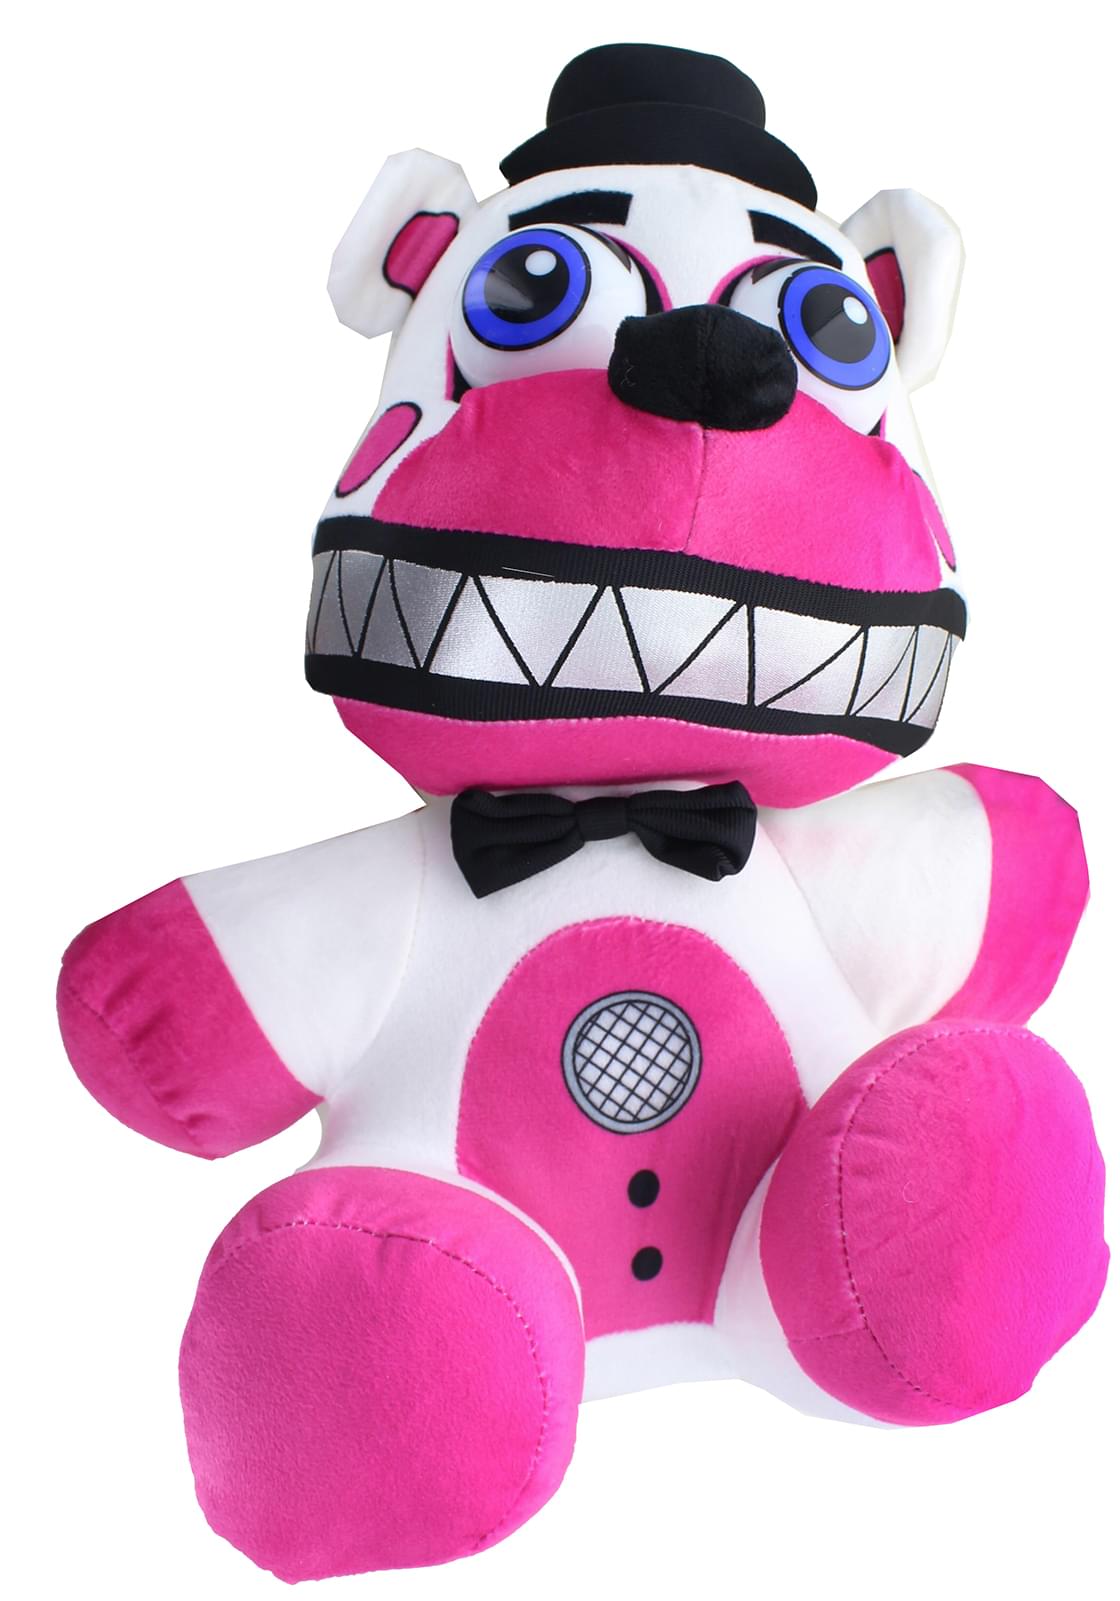 Funko Five Nights at Freddy's Freddy Fazbear 18in Plush Stuffed Collectible  for sale online